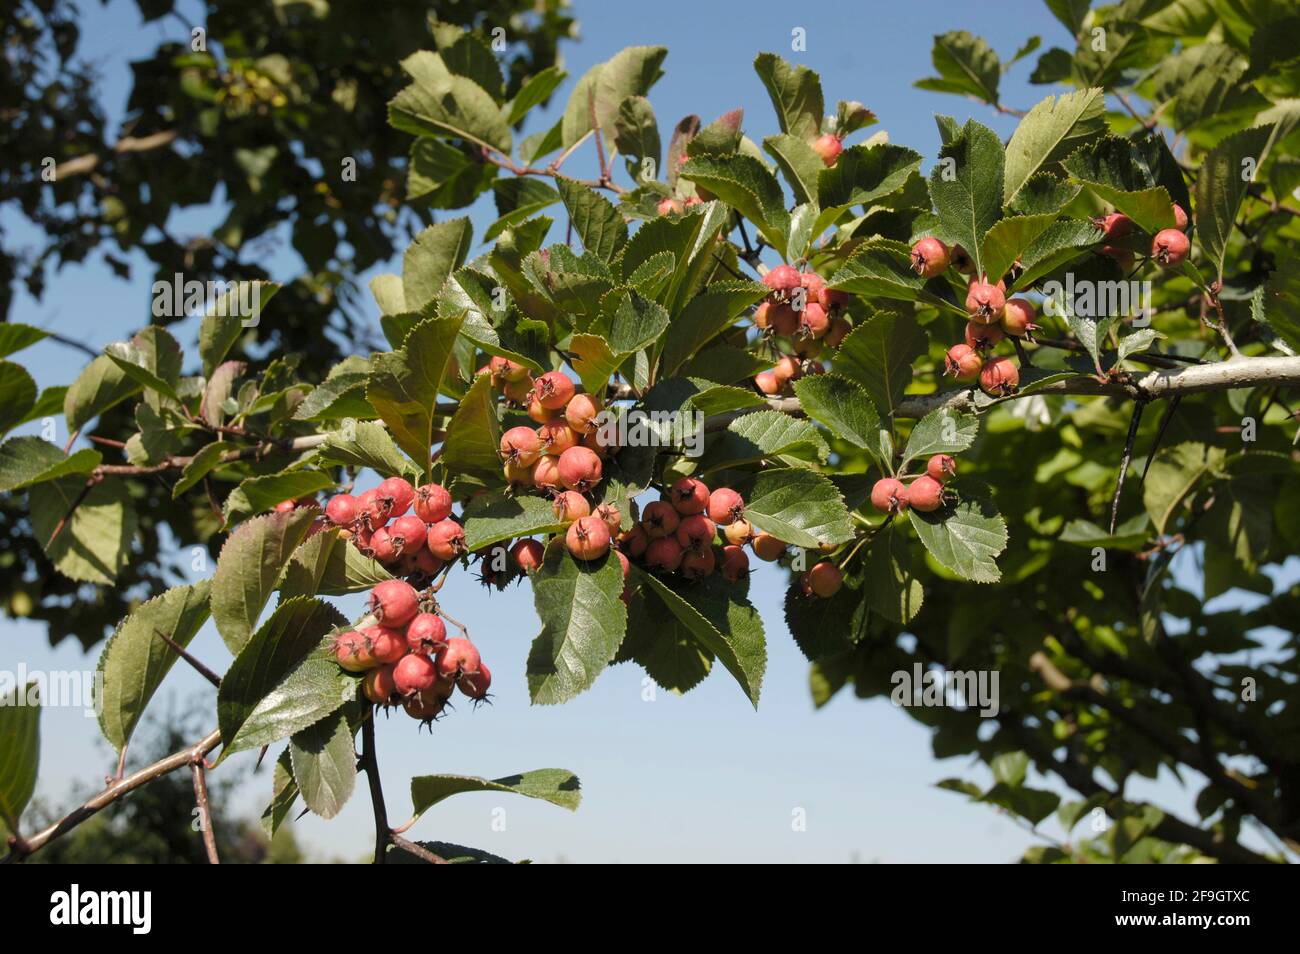 Scarlet hawthorn berries (Crataegus pedicellata) Stock Photo